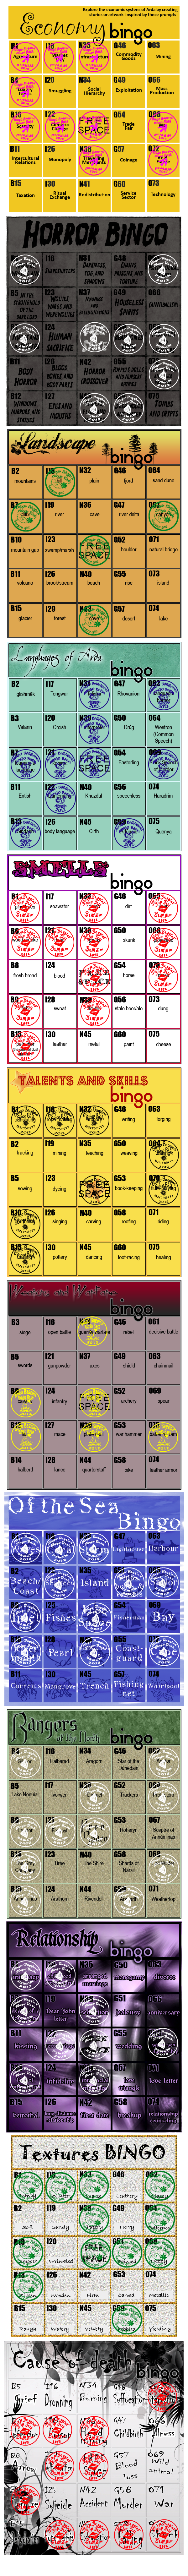 Nath's Bingo Cards